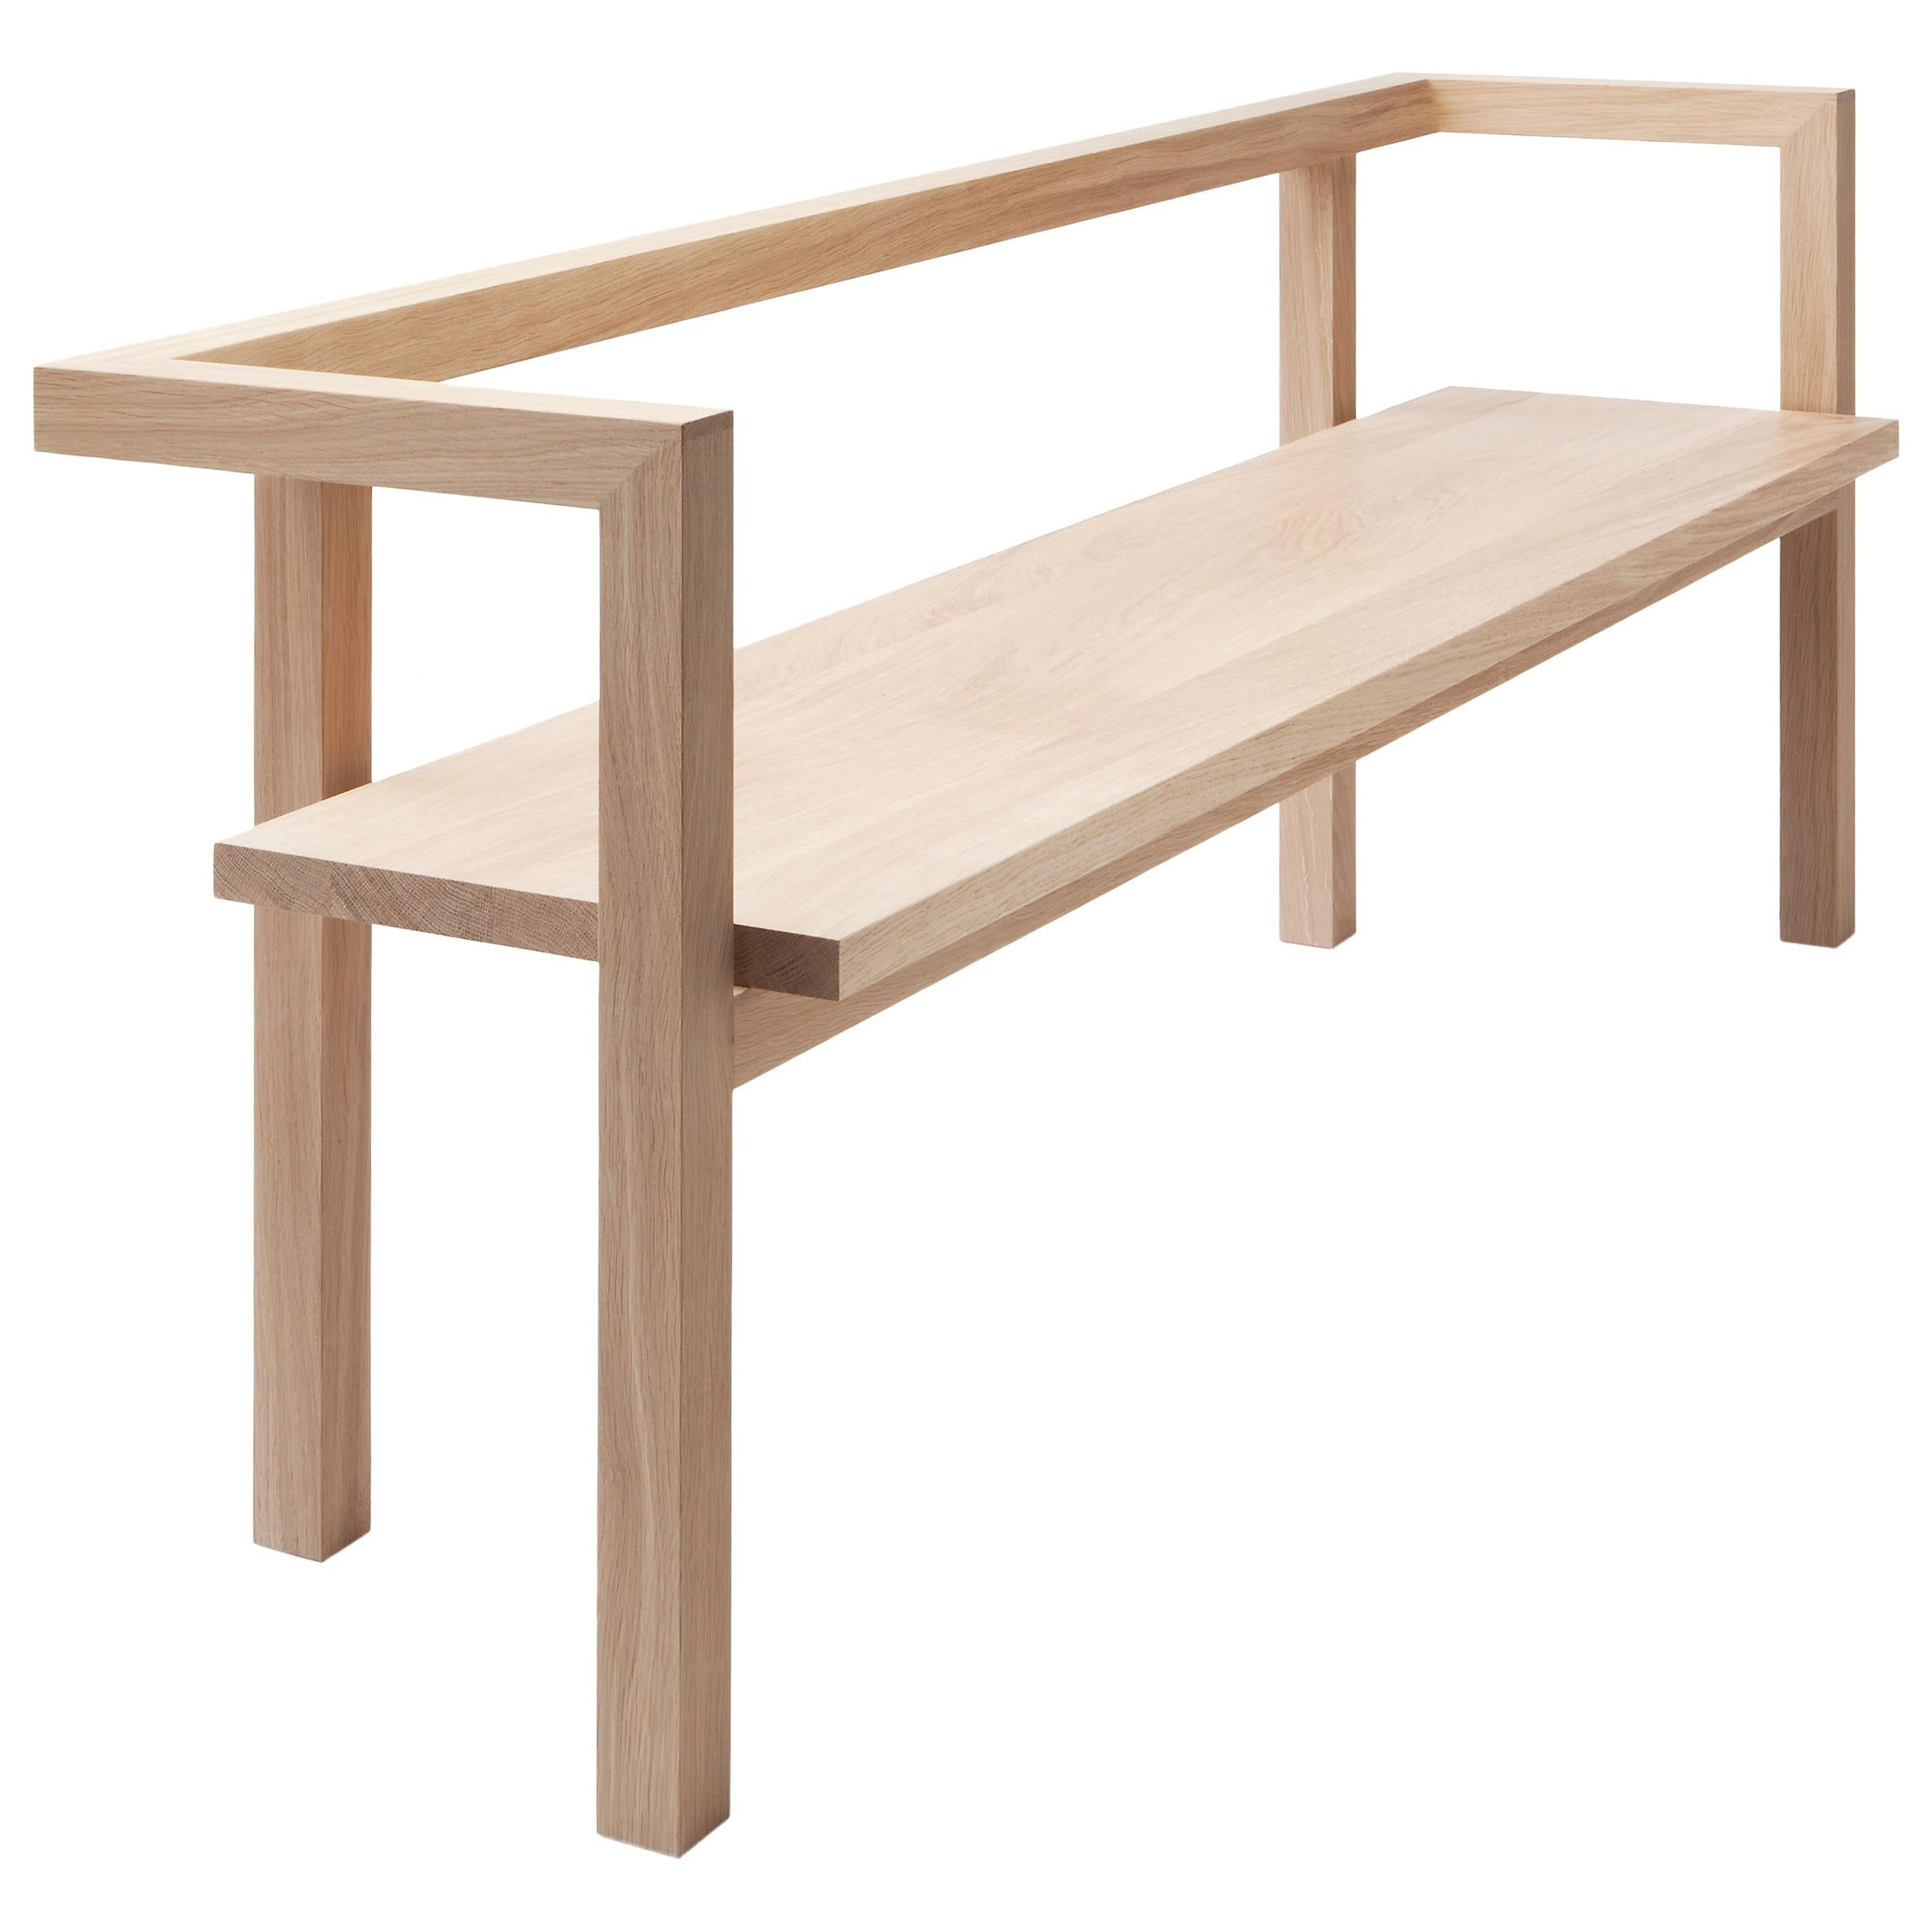 Konstruktio solid wood bench by Kari Virtanen For Sale